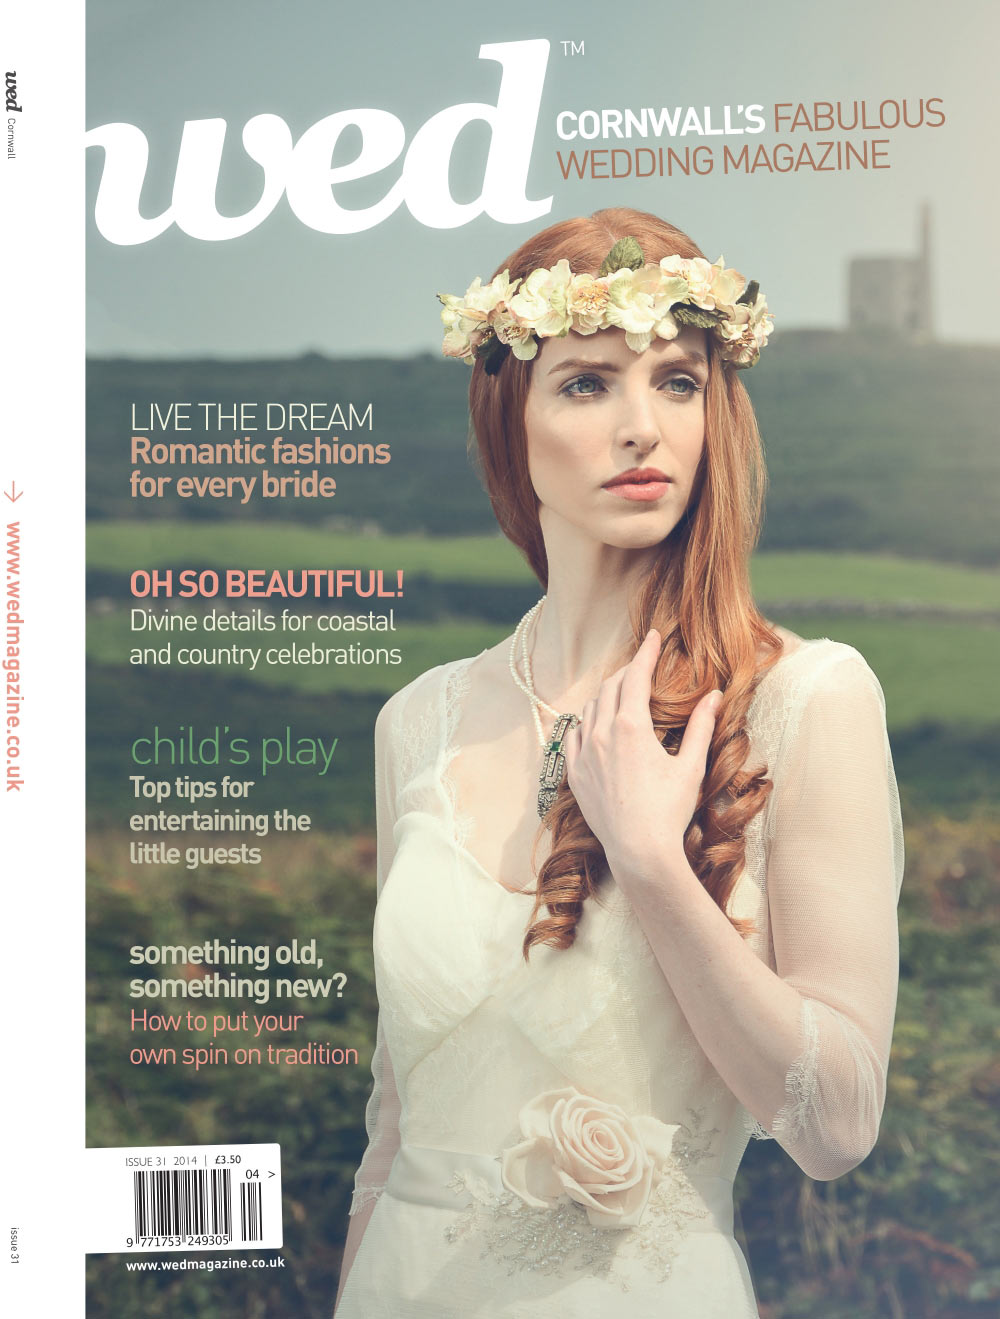 Cornwall Wed Magazine - Issue 31